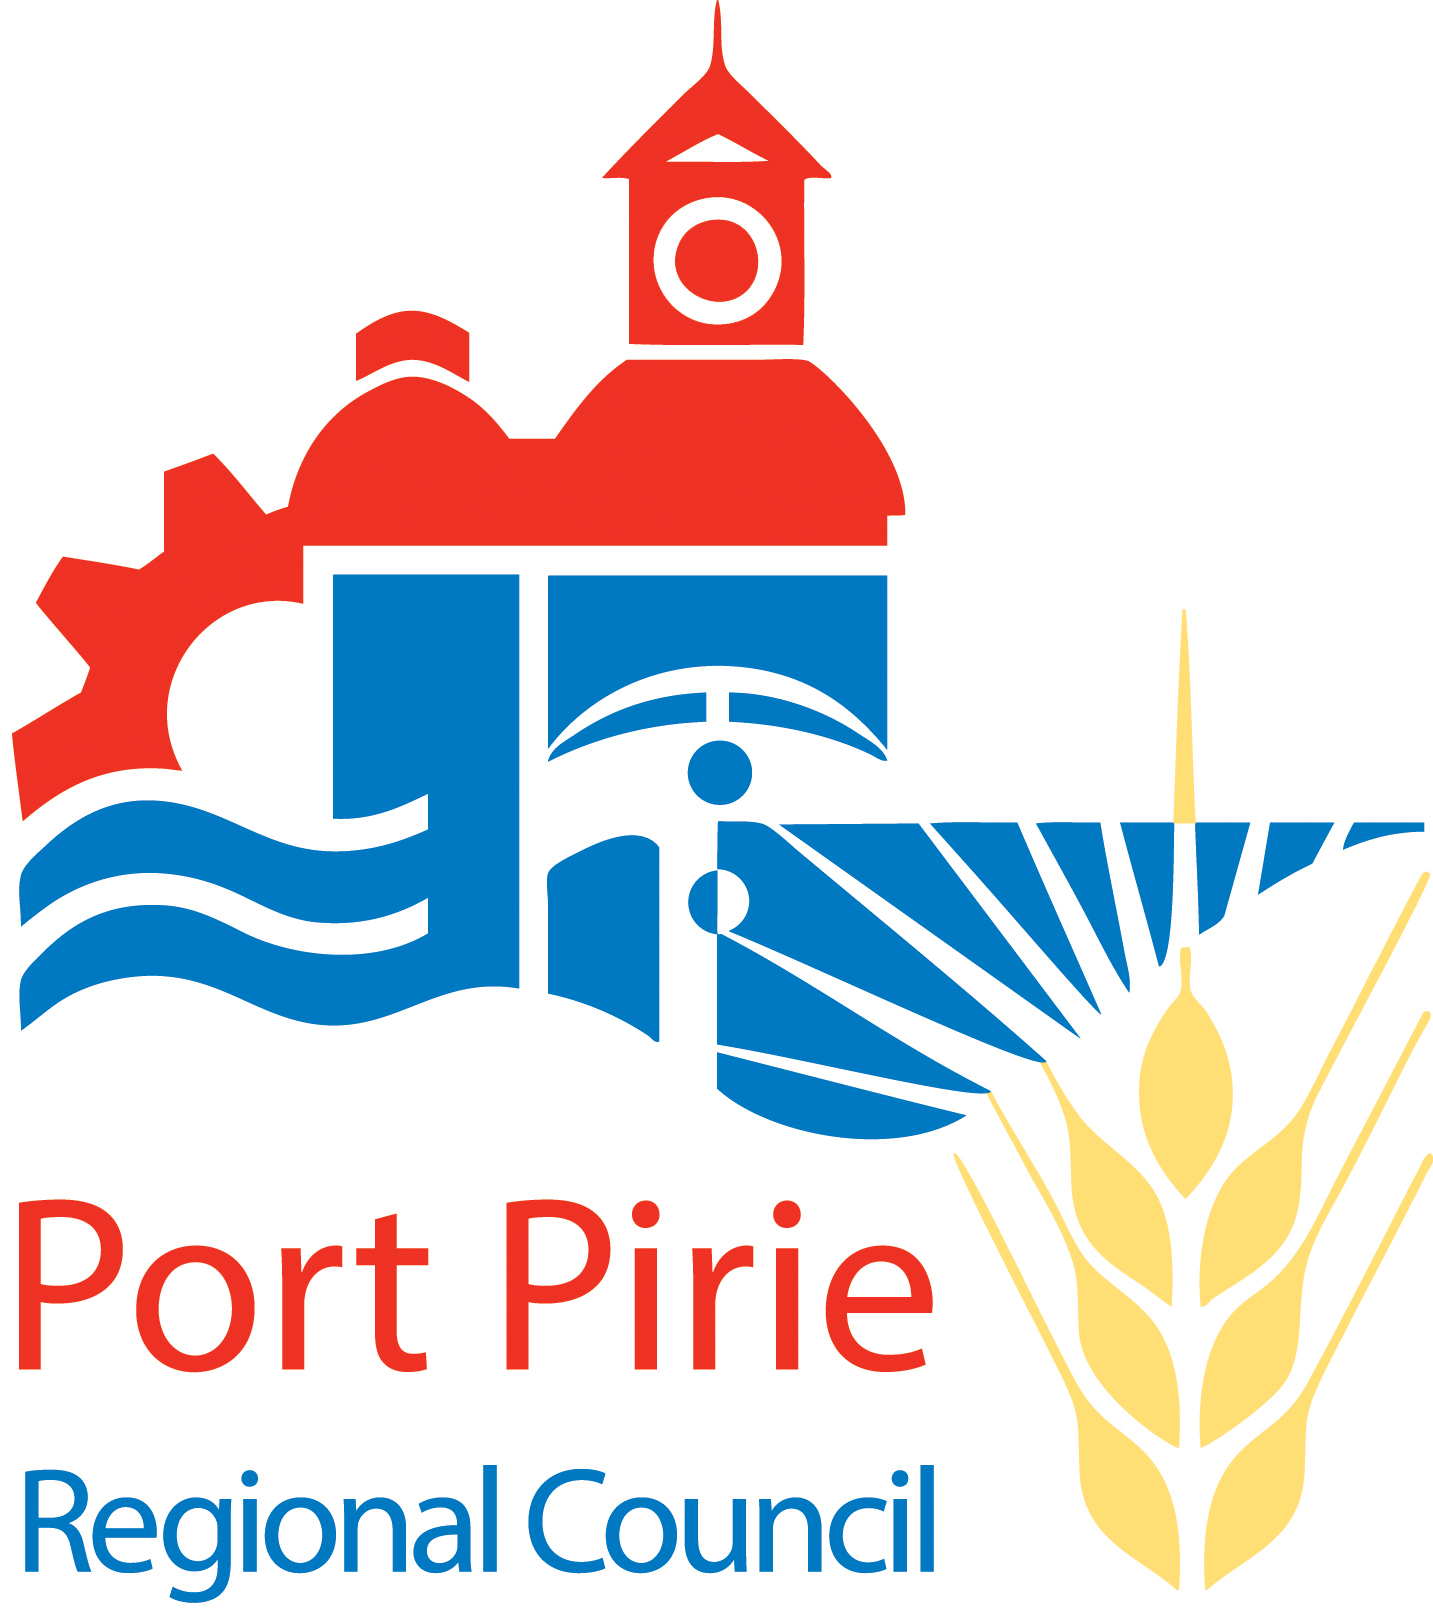 Council Logo - Port Pirie Regional Council - Council Logo